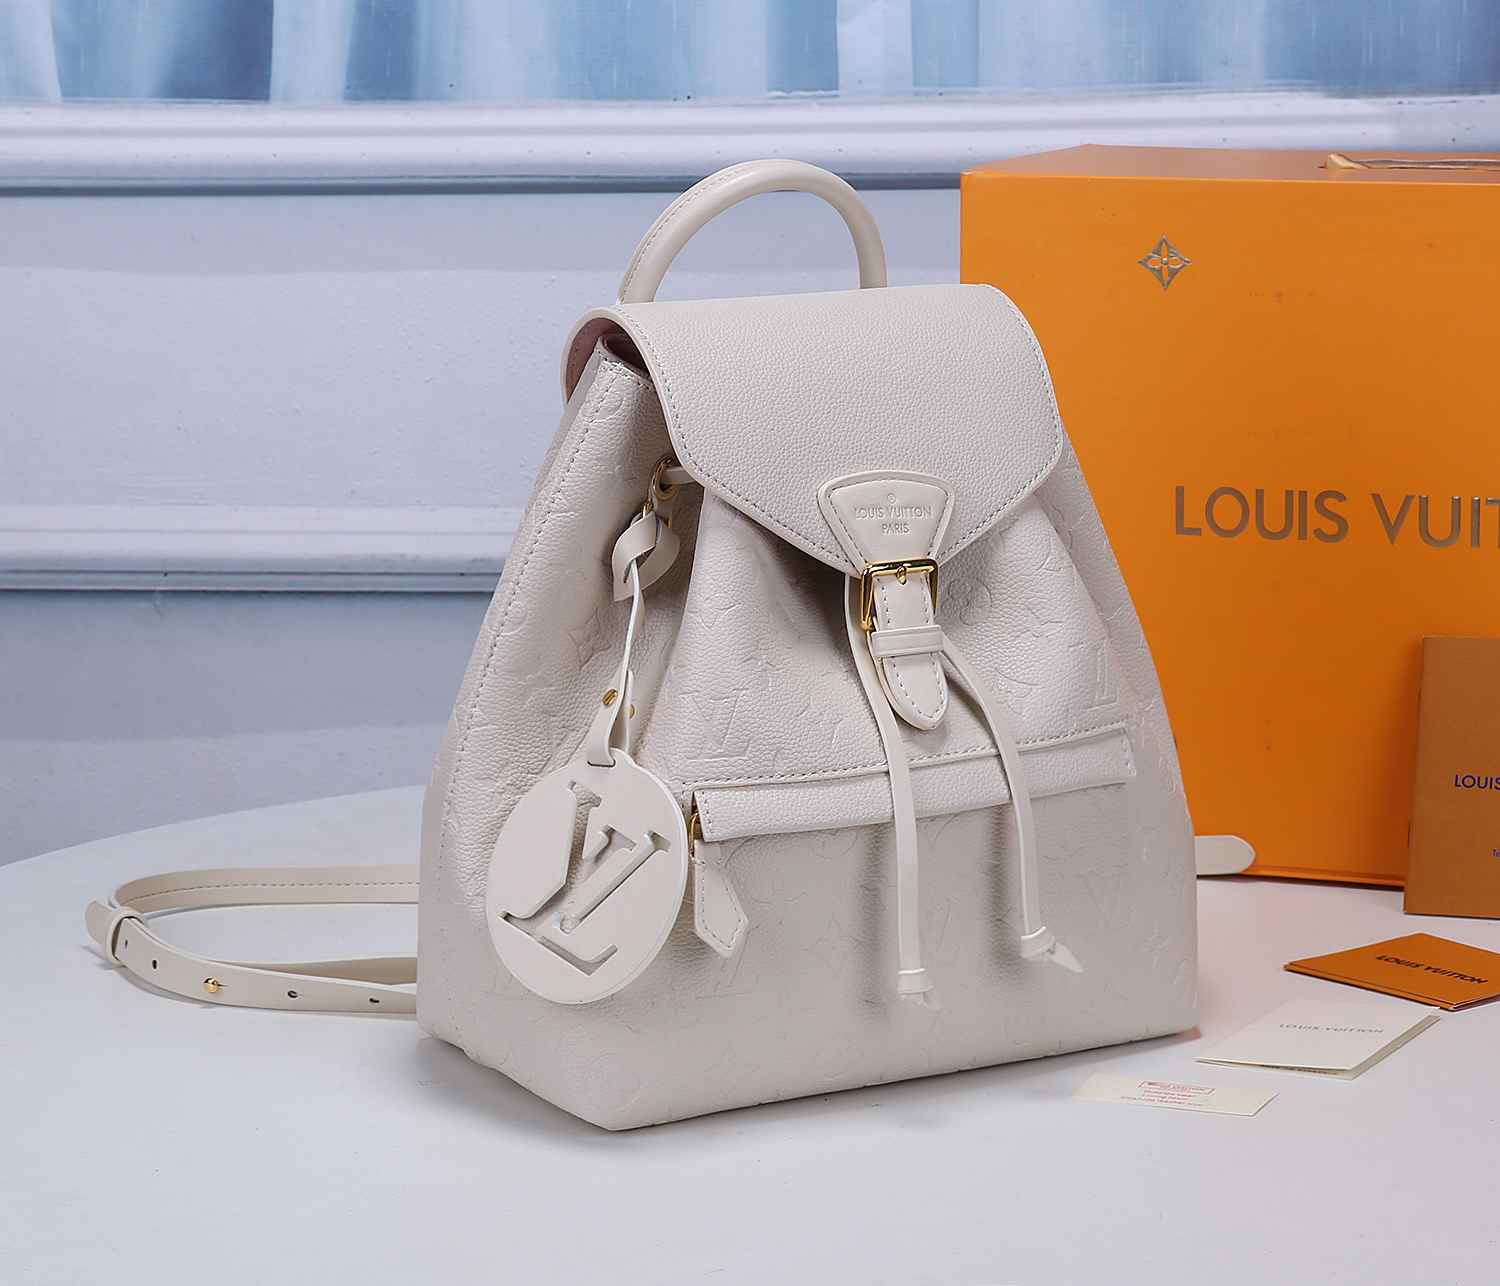 Shop Louis Vuitton 2020-21FW Montsouris backpack (M45397, M45410, M45205)  by sunnyfunny